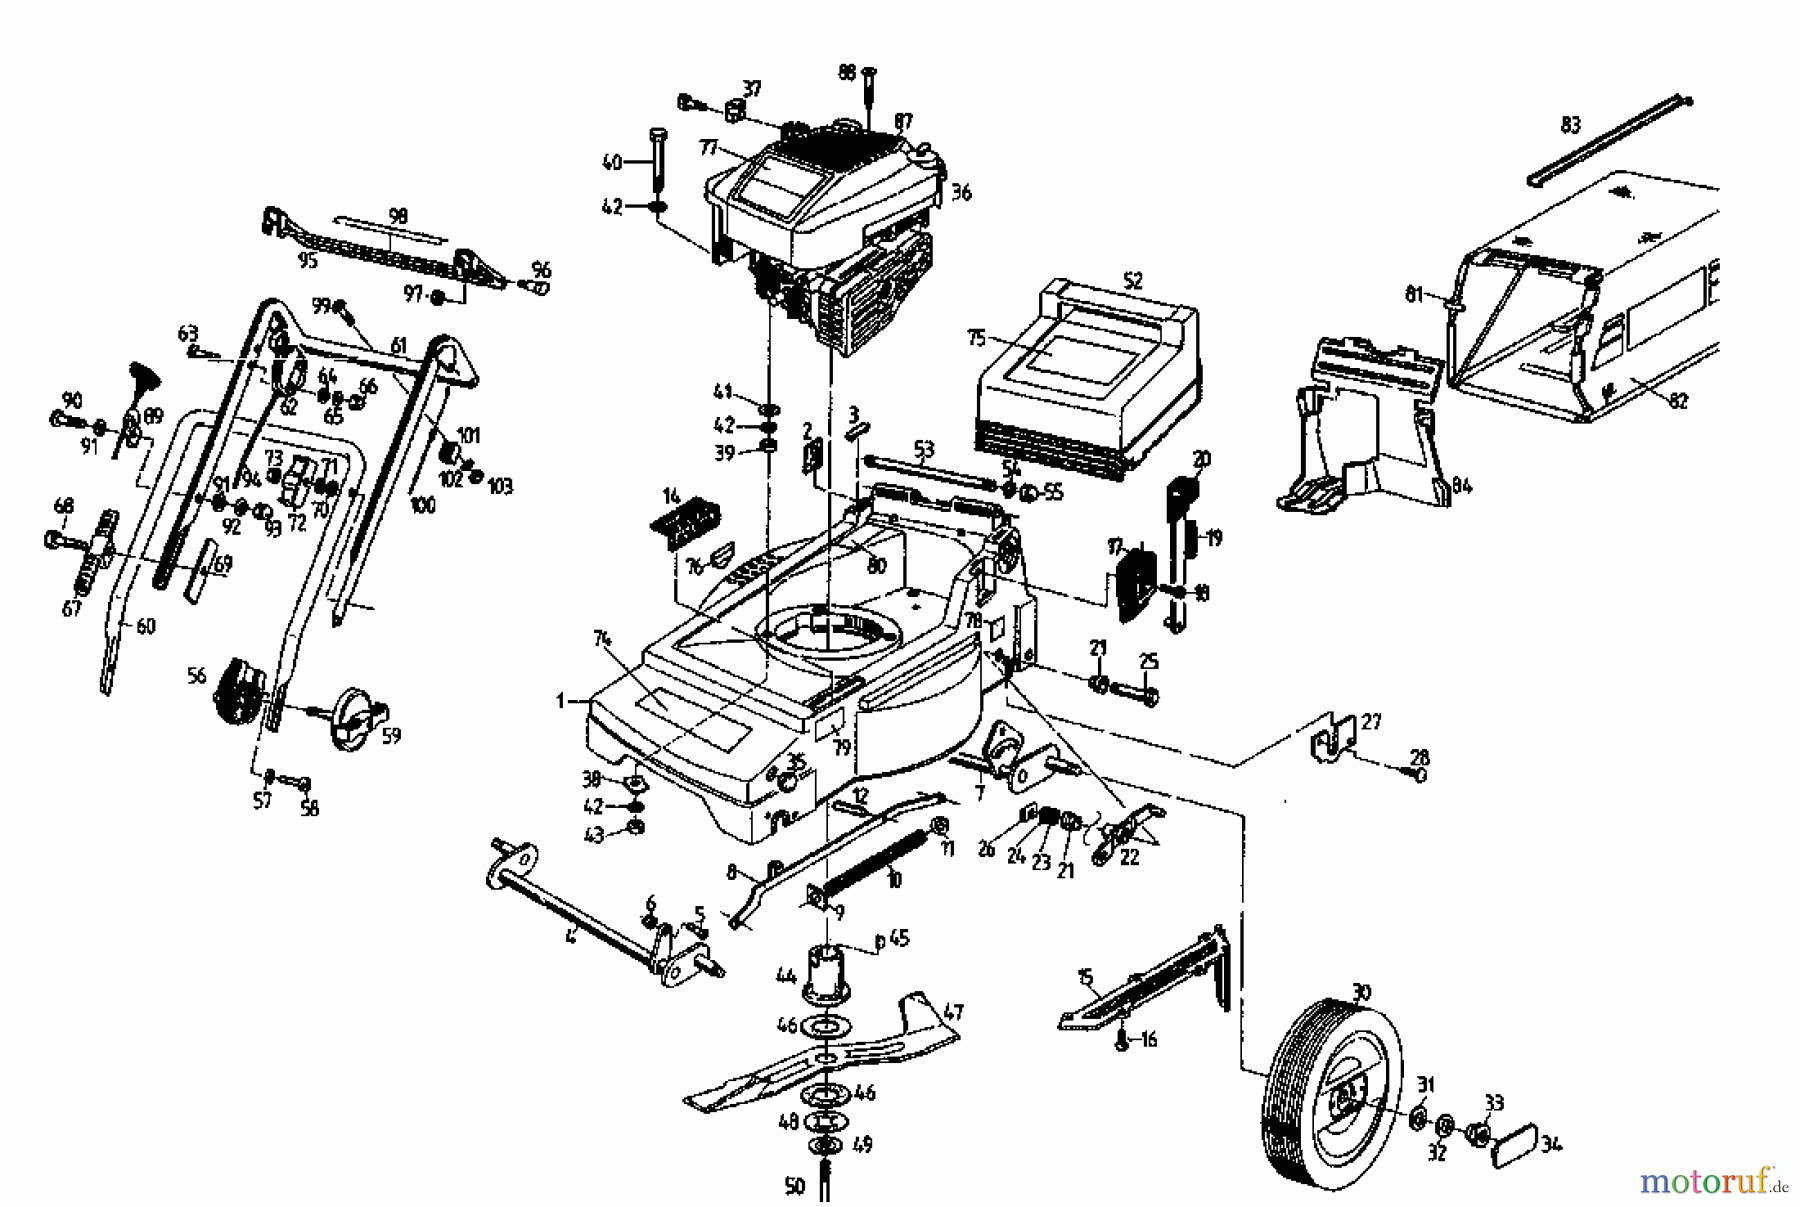  Gutbrod Petrol mower MH 404 04018.05  (1995) Basic machine